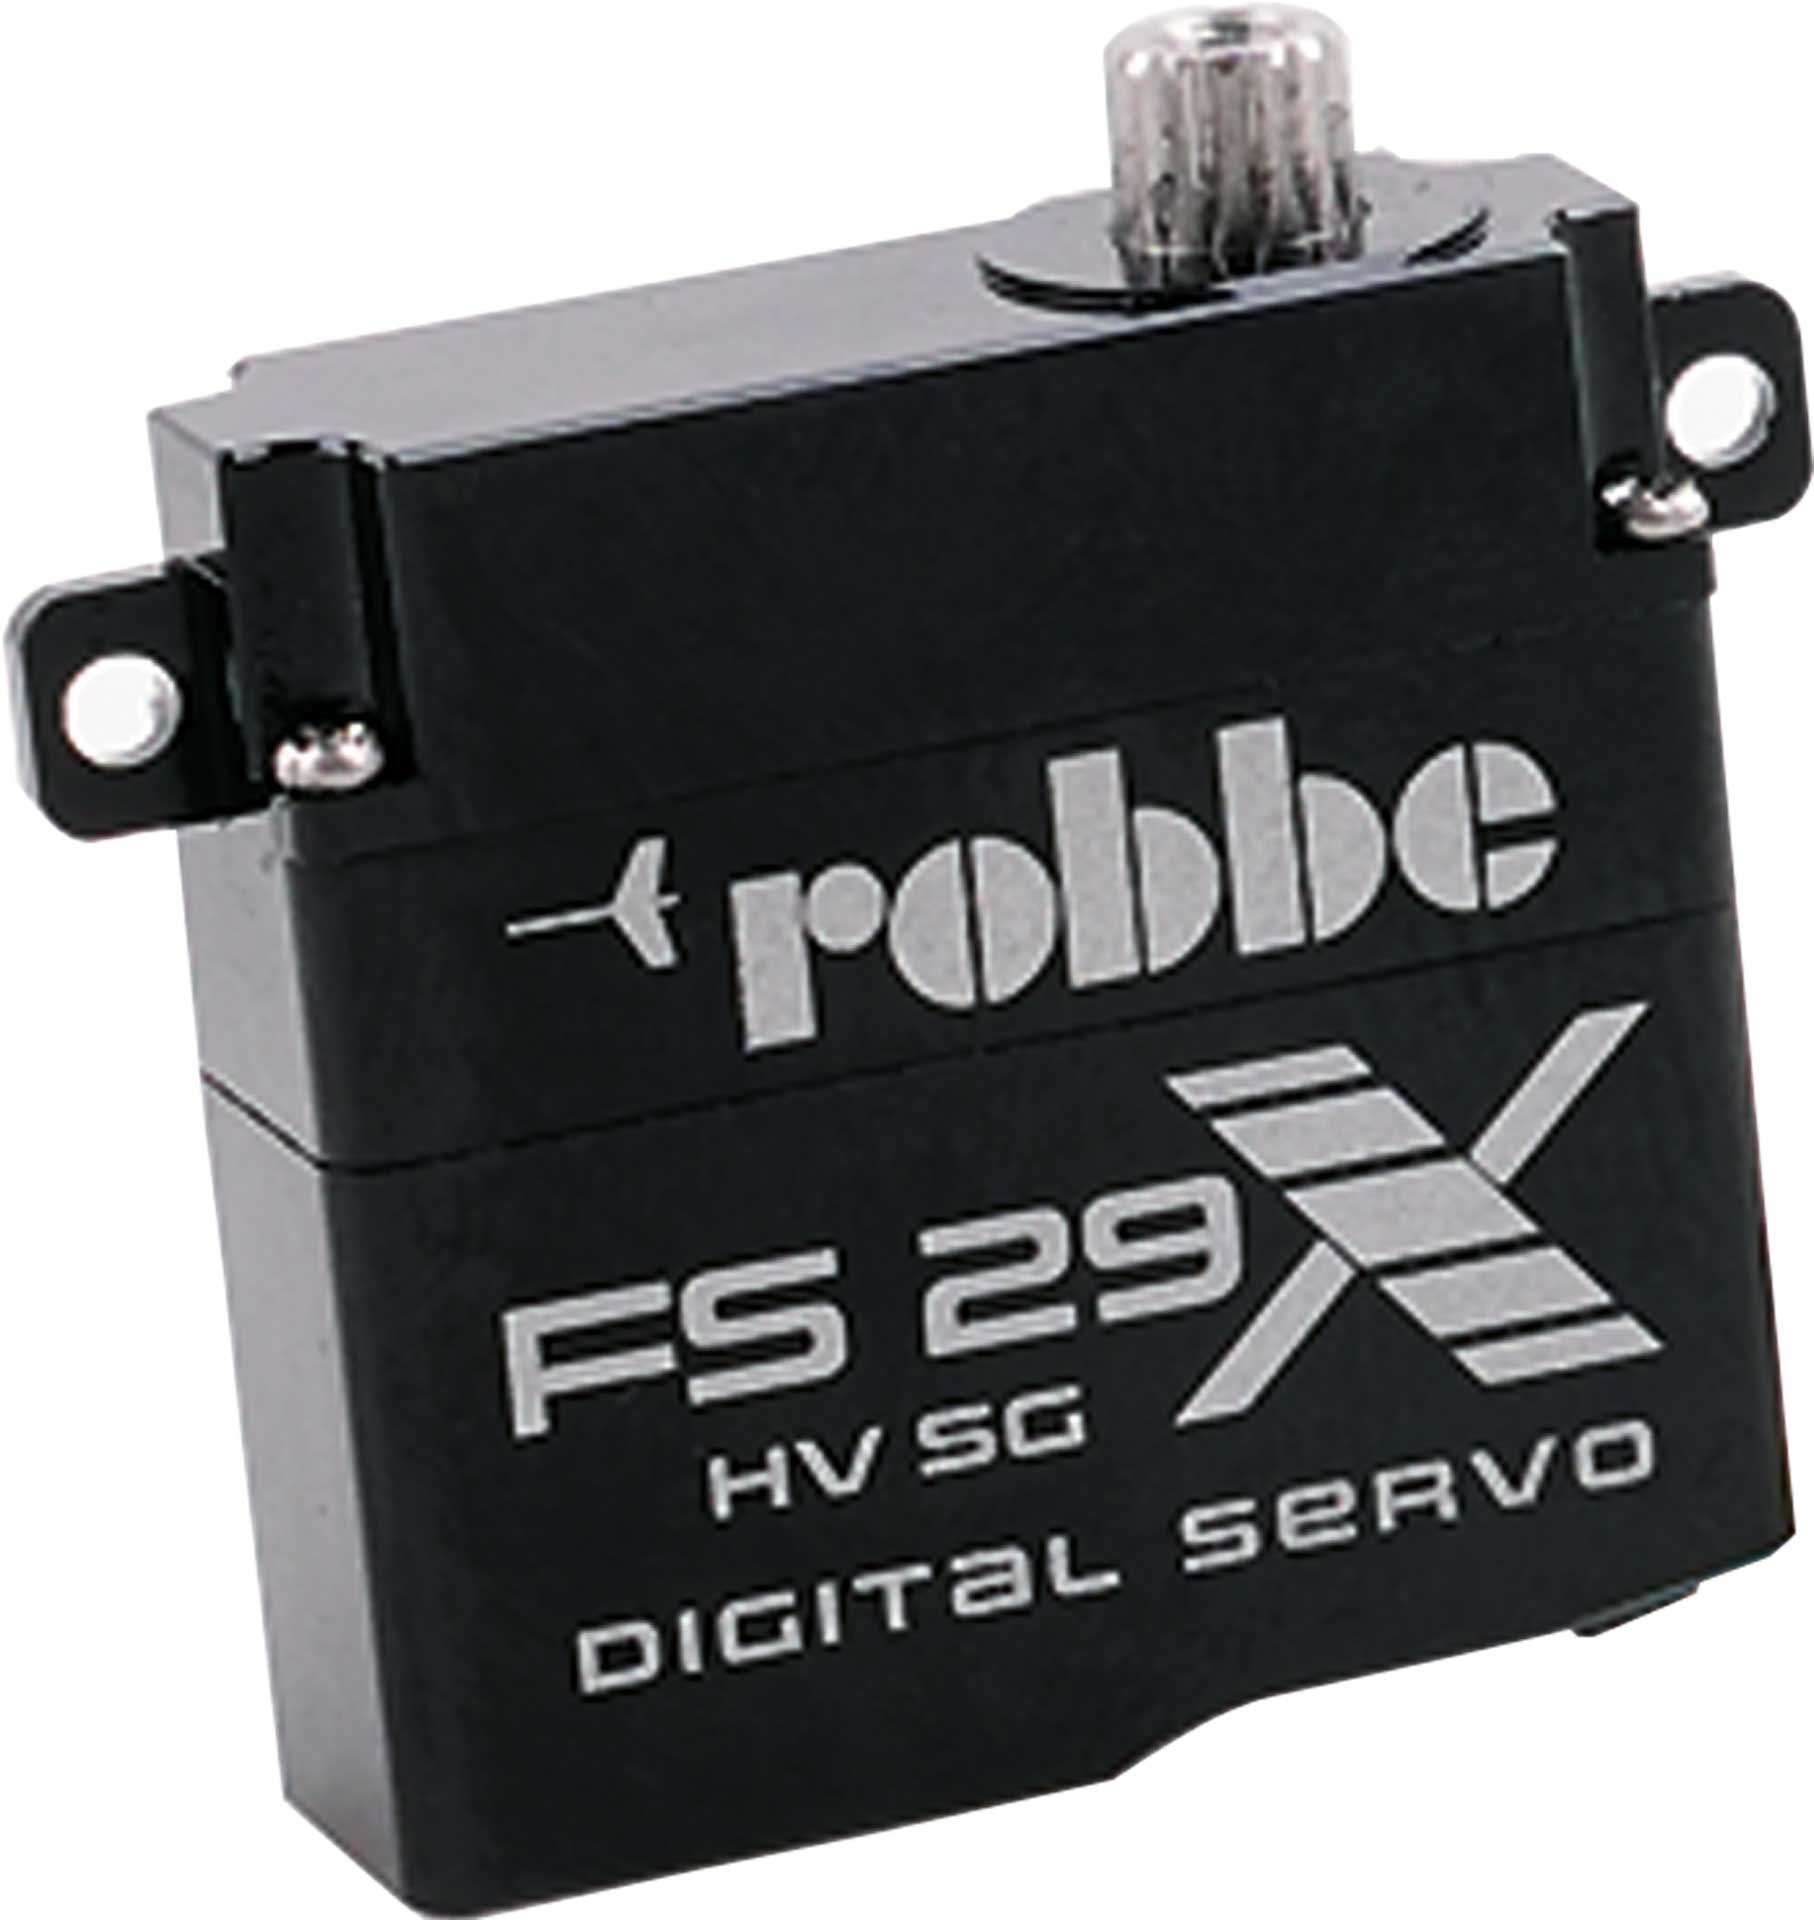 Robbe Modellsport FS 29 X HV SG Digital Servo Dimensions compatibles avec le KST X-08 avec démarrage progressif